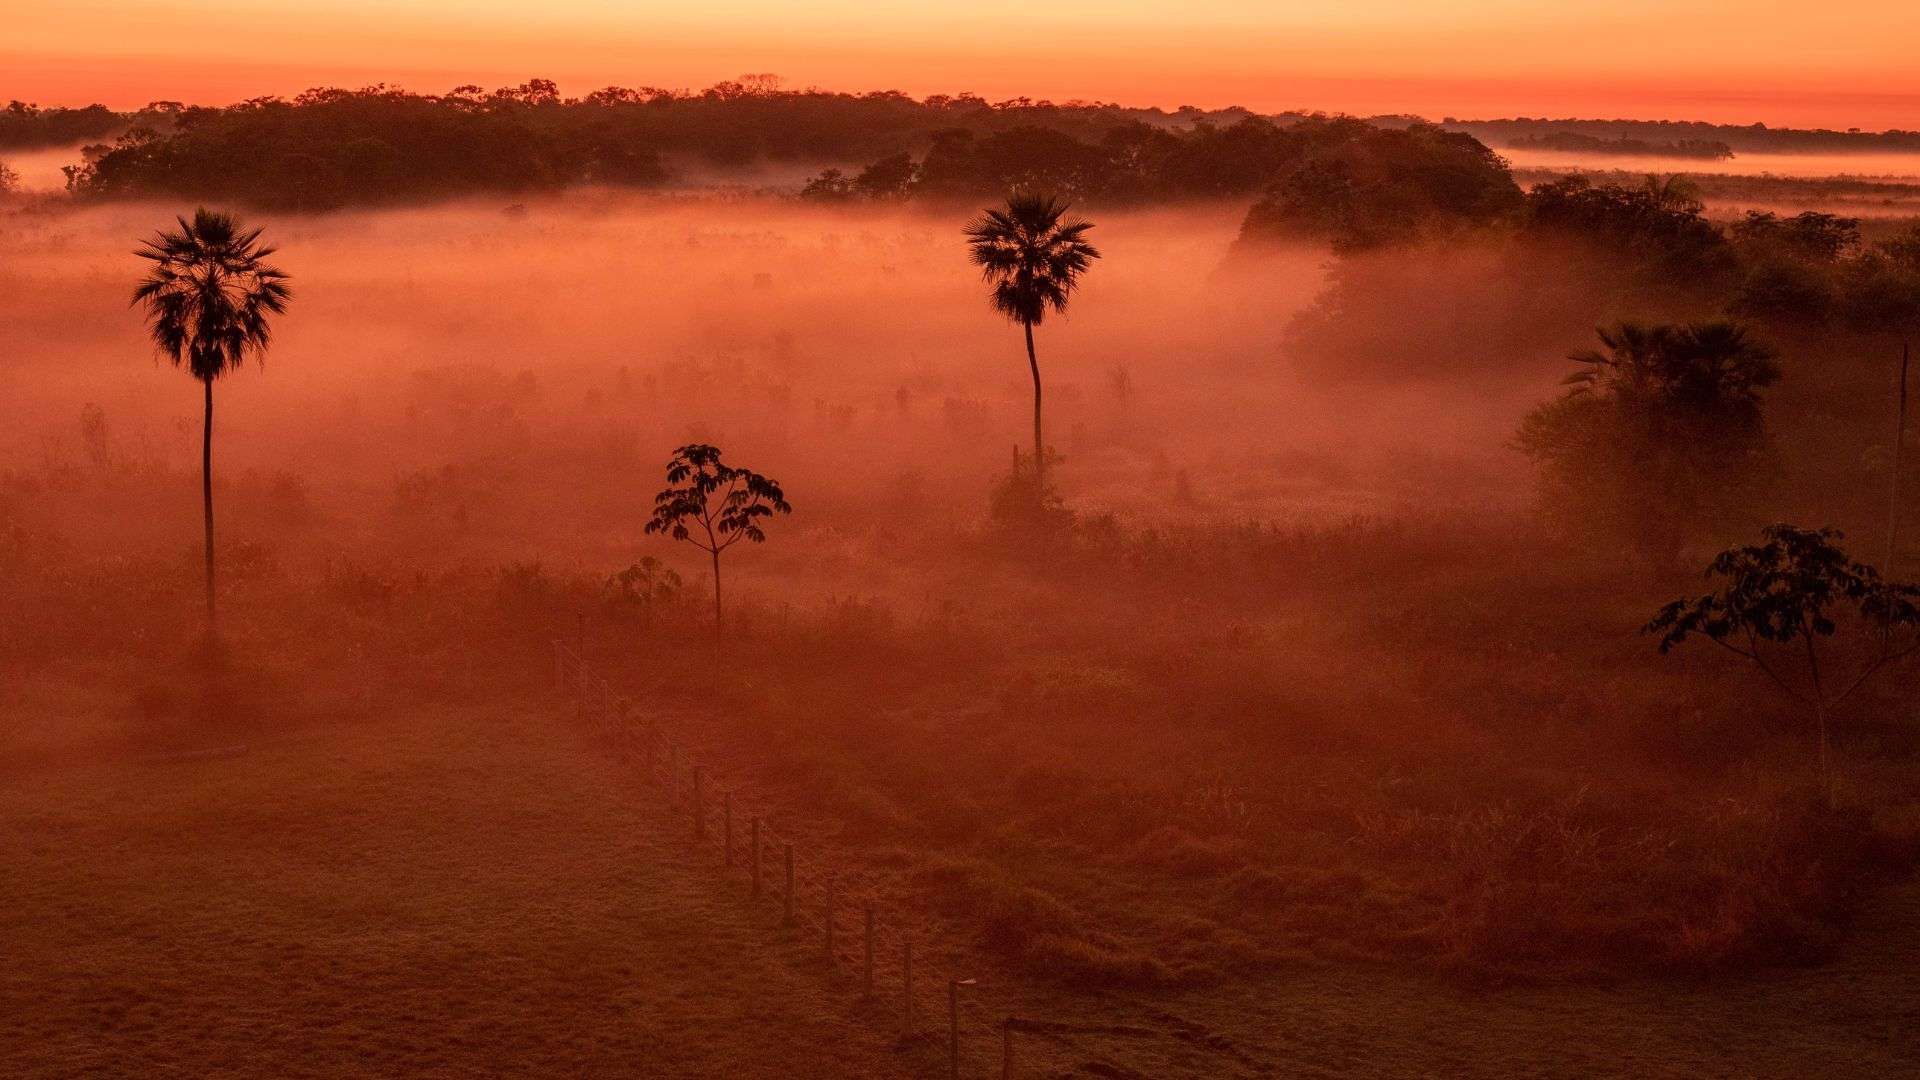 Landscape of the Pantanal at dusk/dawn